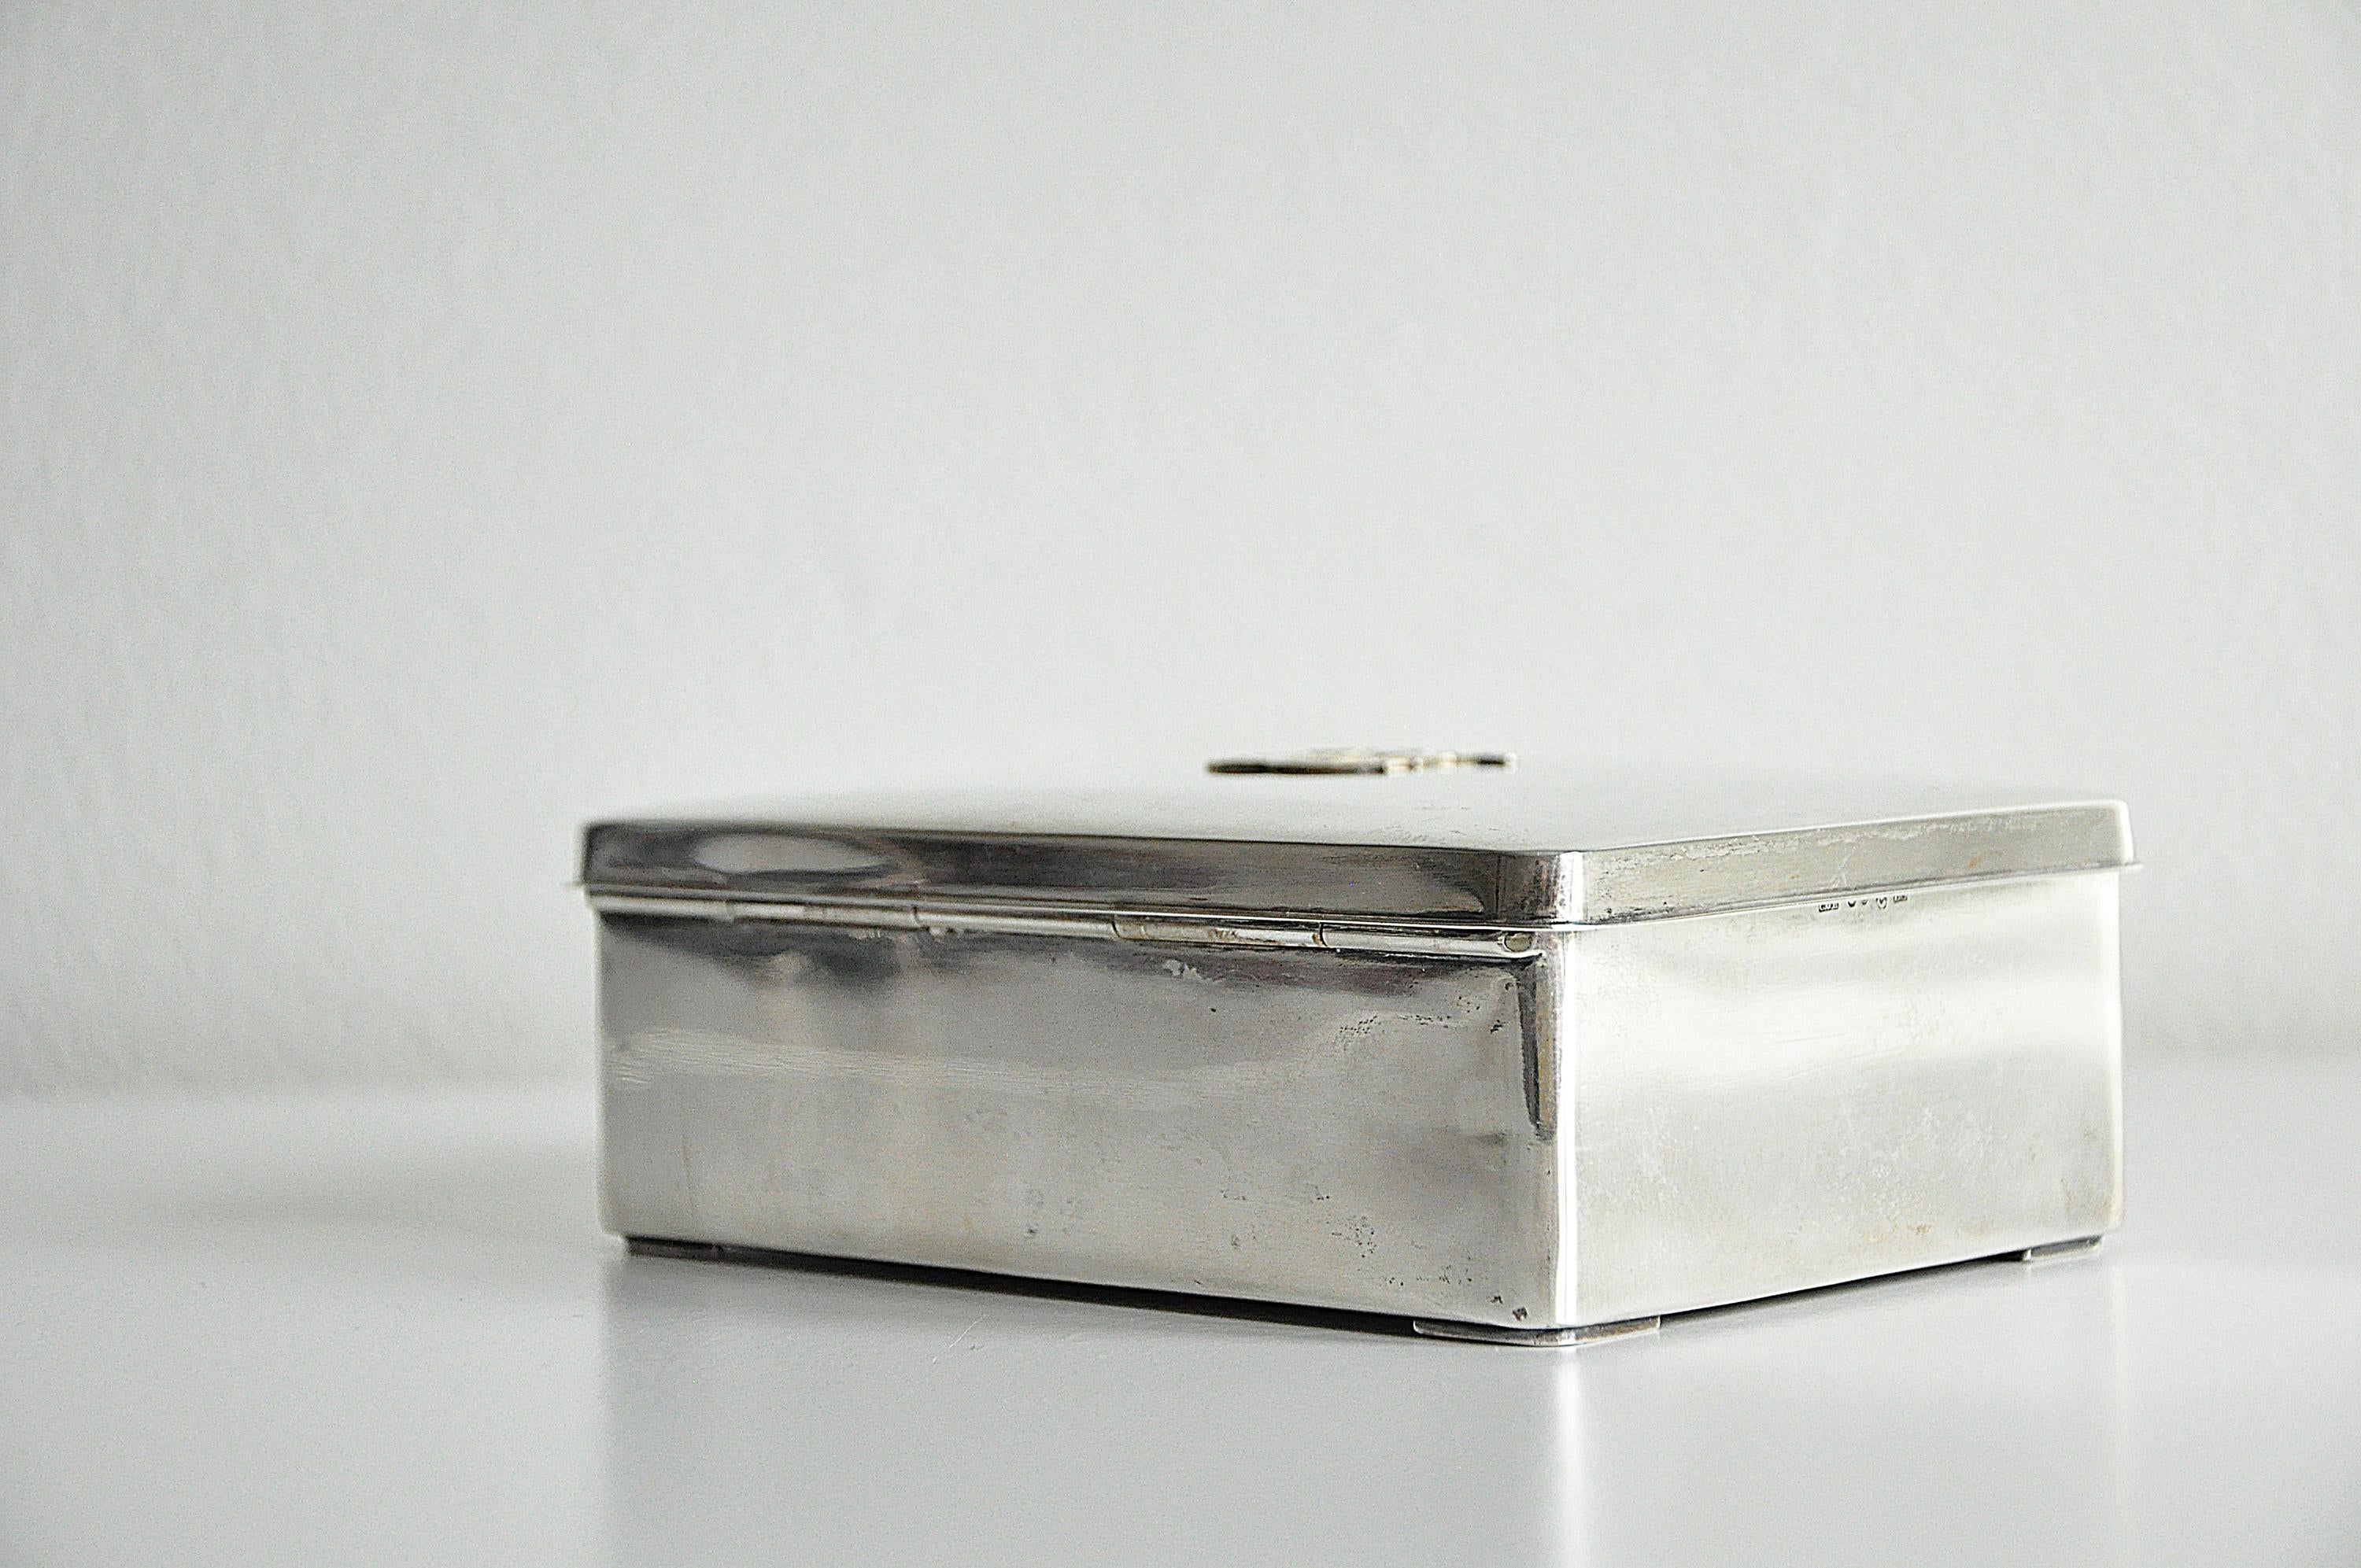 Scandinavian Modern Silver Box from C. G. Hallberg, Sweden -1937 For Sale 3